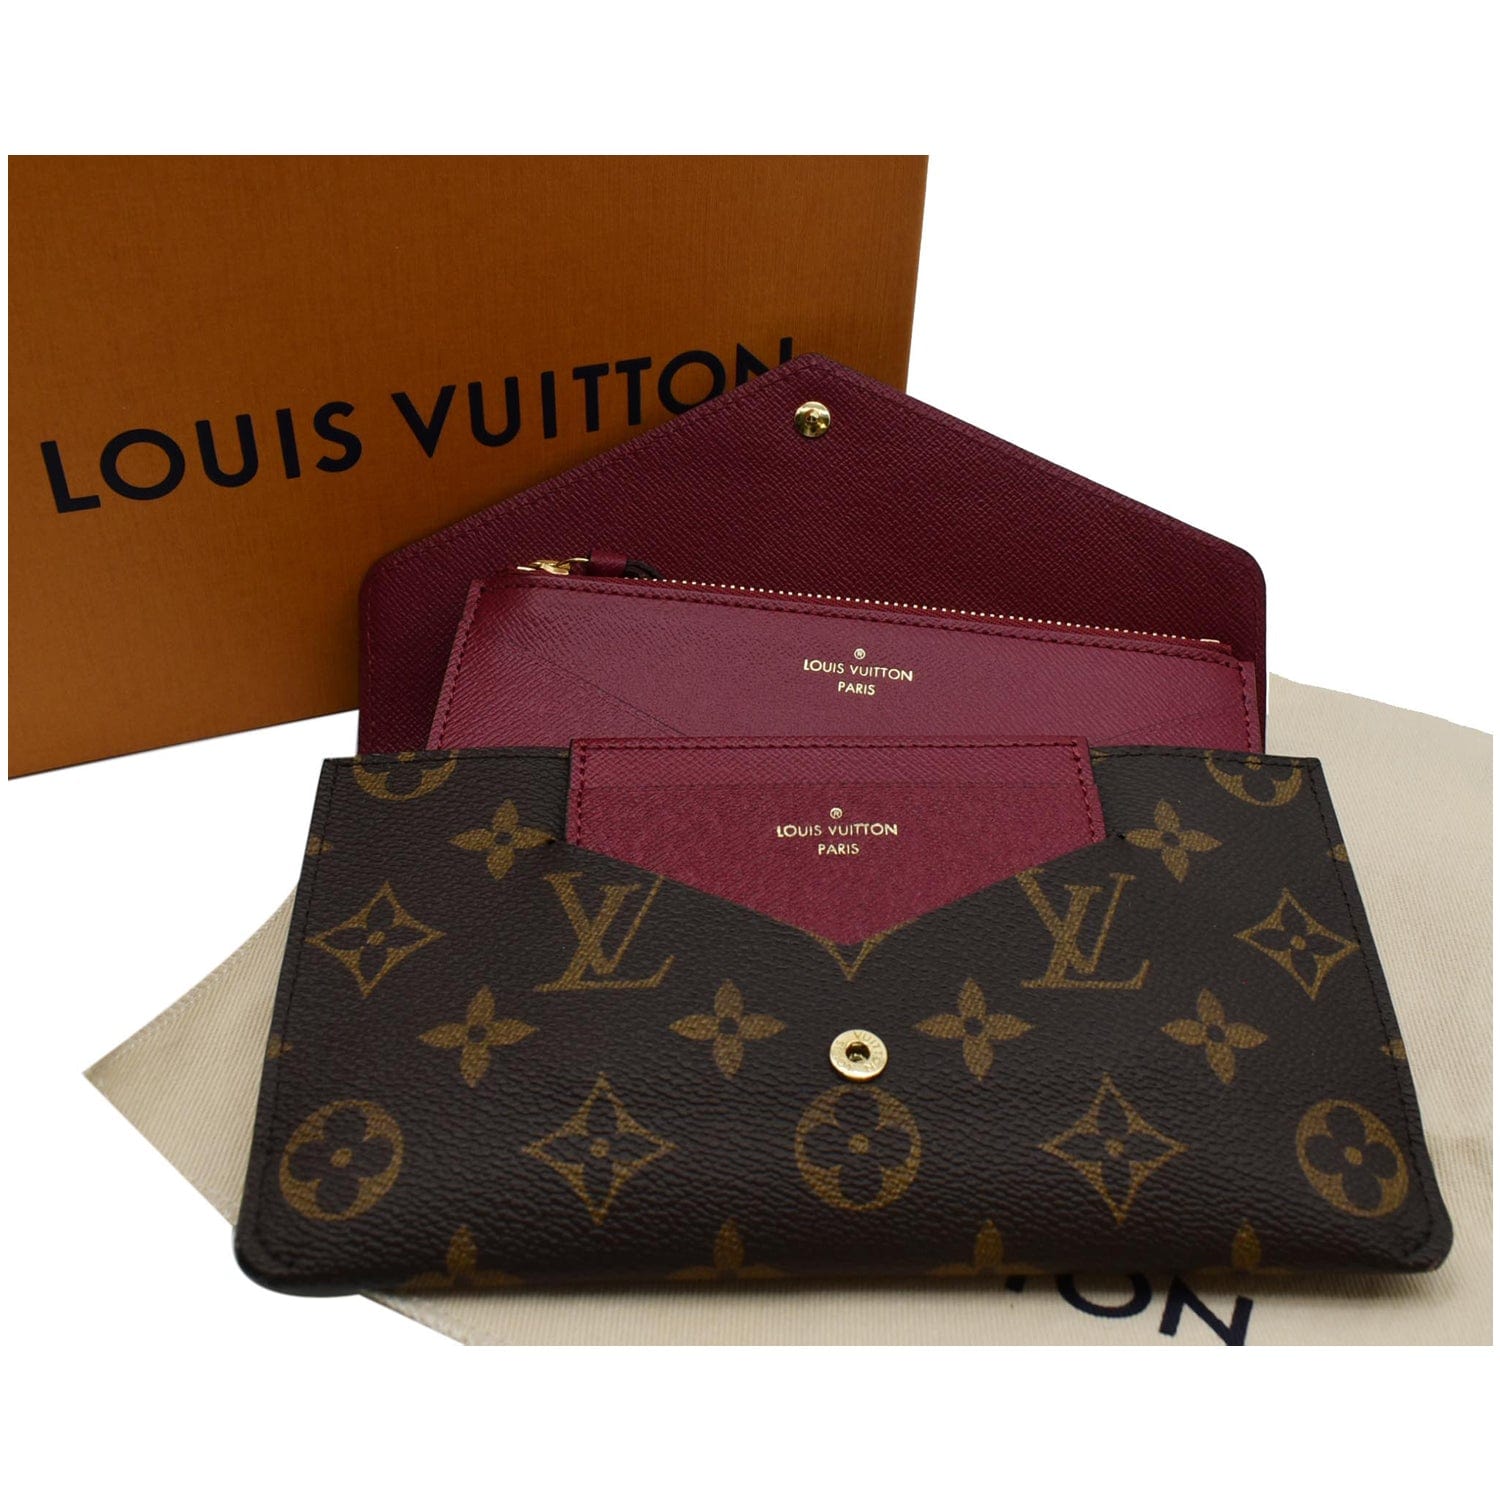 Louis Vuitton Sarah Wallet with Insert